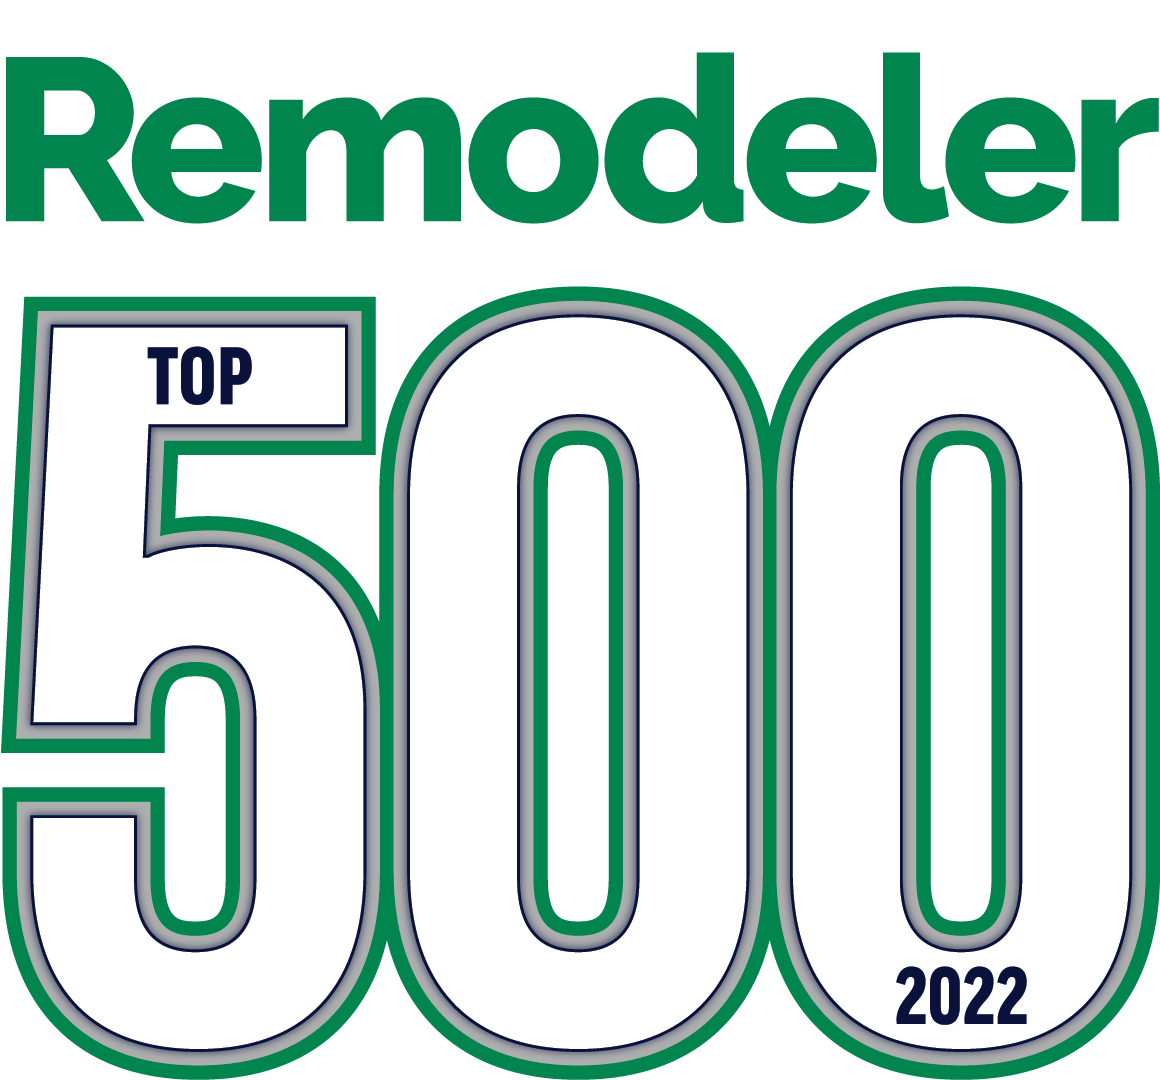 Qualified Remodeler Top 500 2022